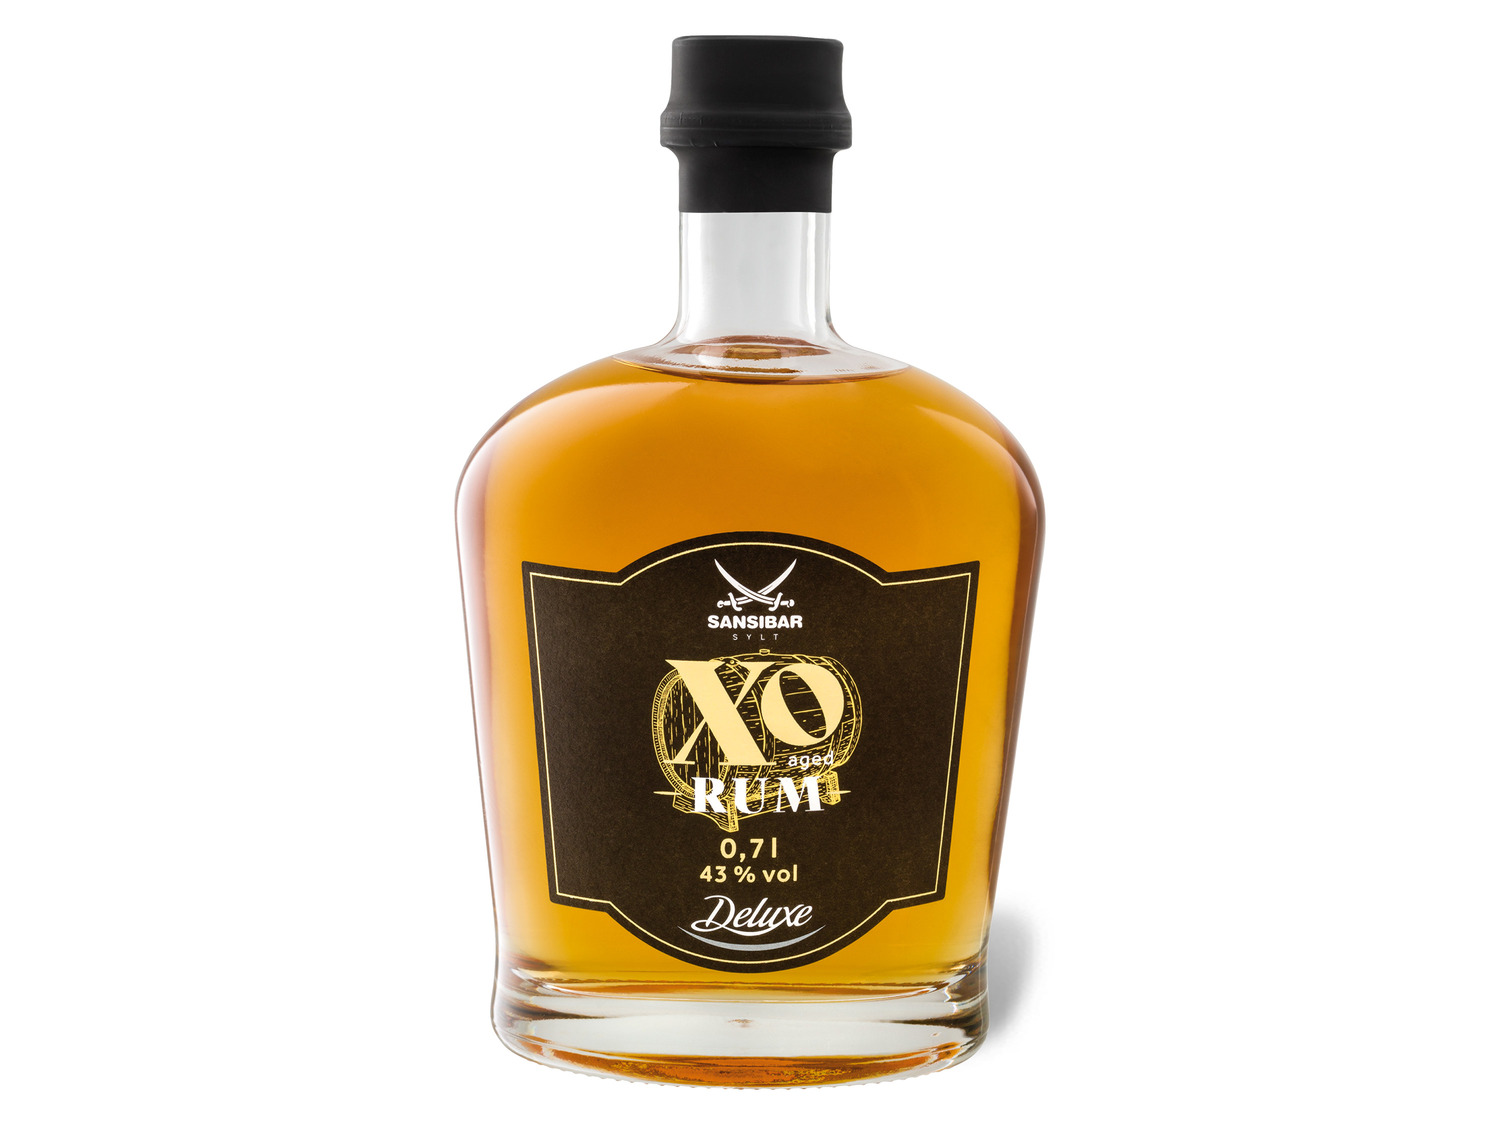 Sansibar Deluxe XO Aged Rum 43% Vol | LIDL